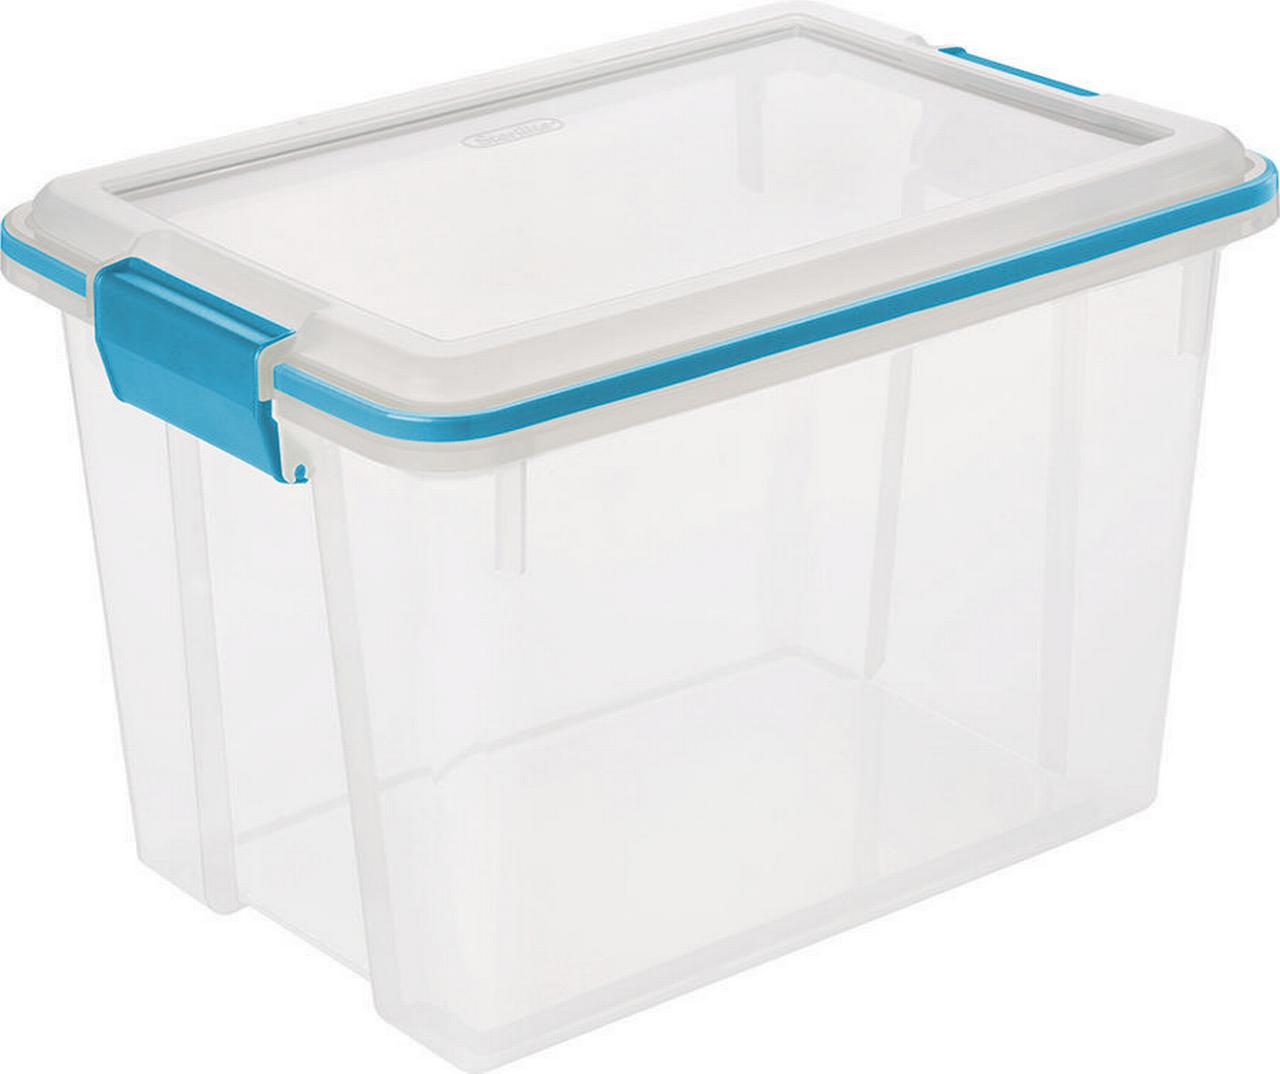 Sterilite 20 Quart Clear Gasket Box with Blue Latches & Gasket Deals